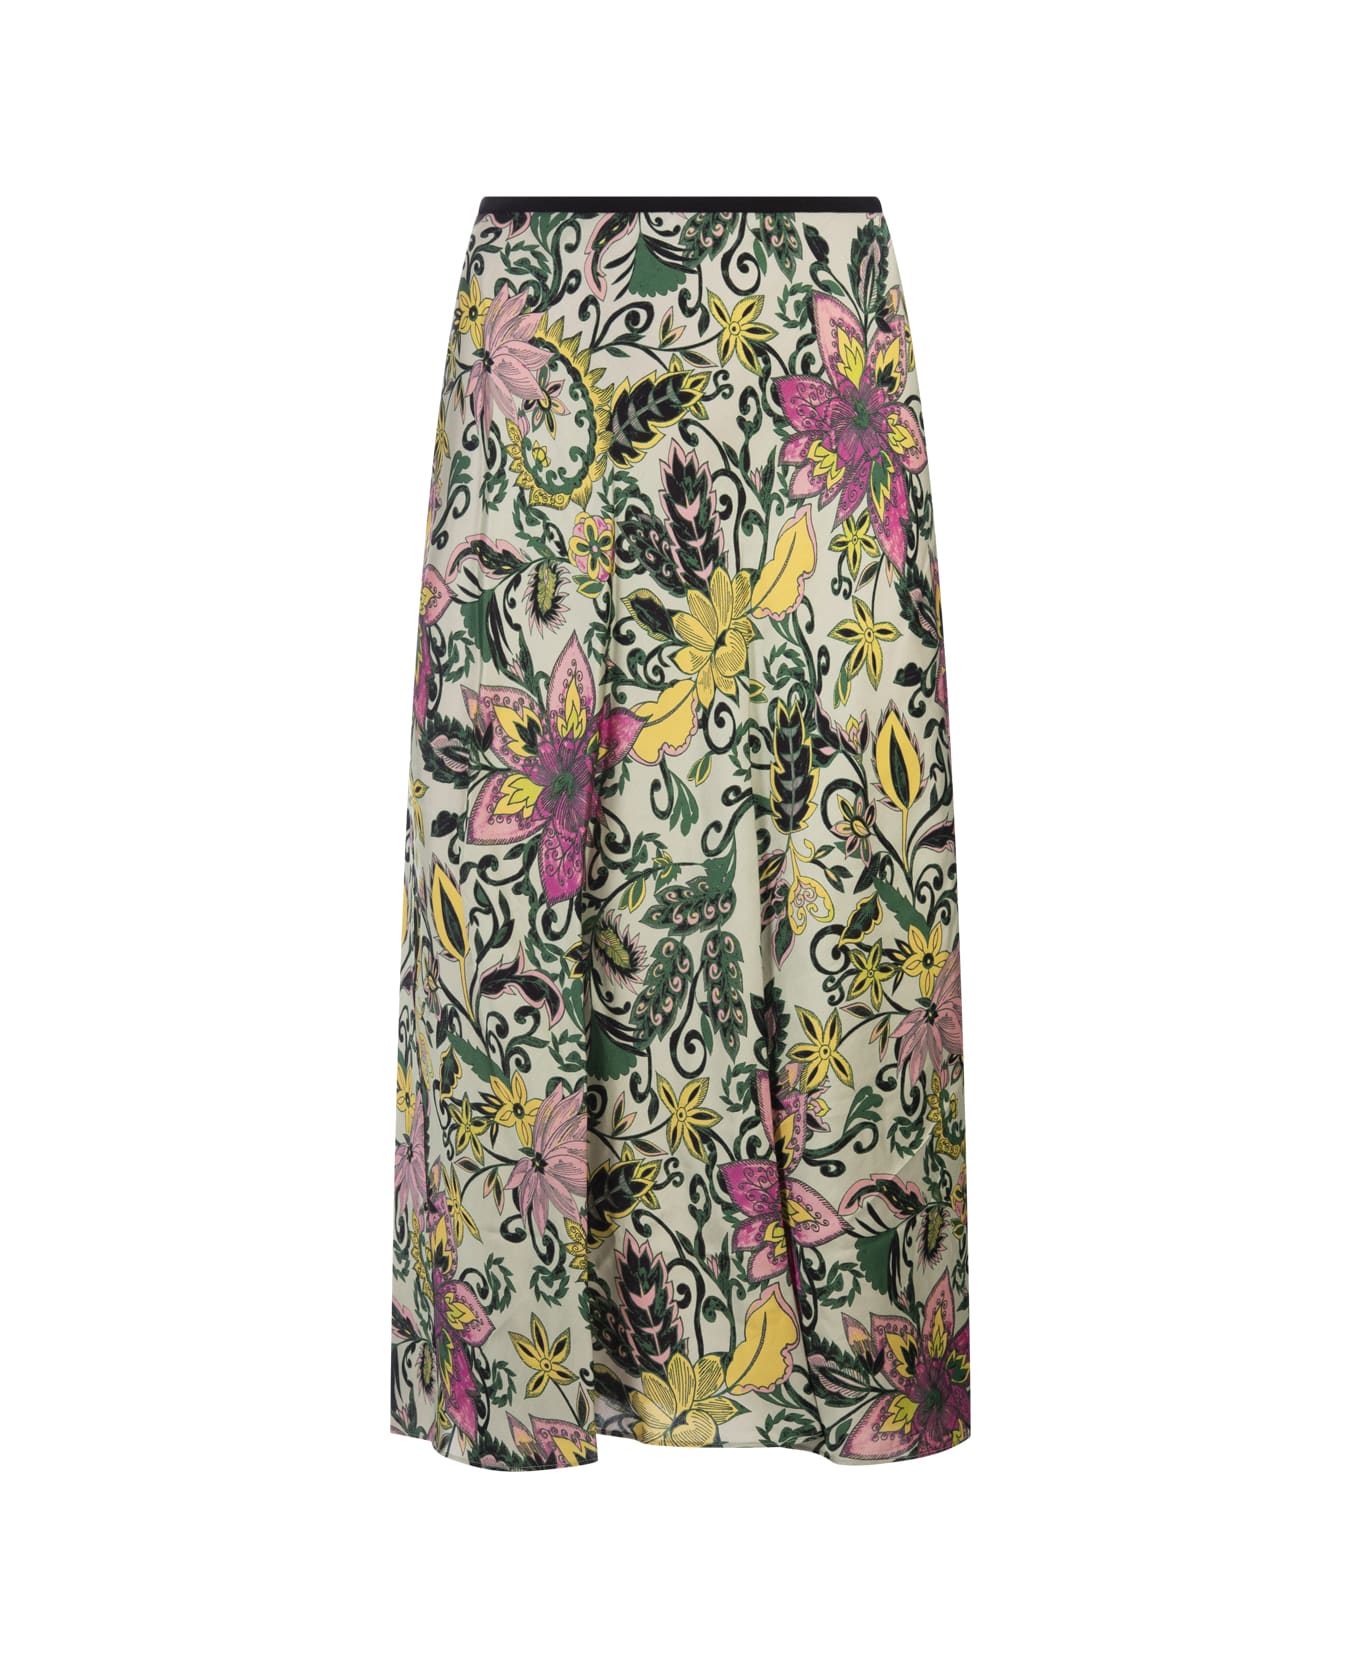 Diane Von Furstenberg Dina Reversible Skirt In Garden Paisley Mint Green And Pink - Multicolour